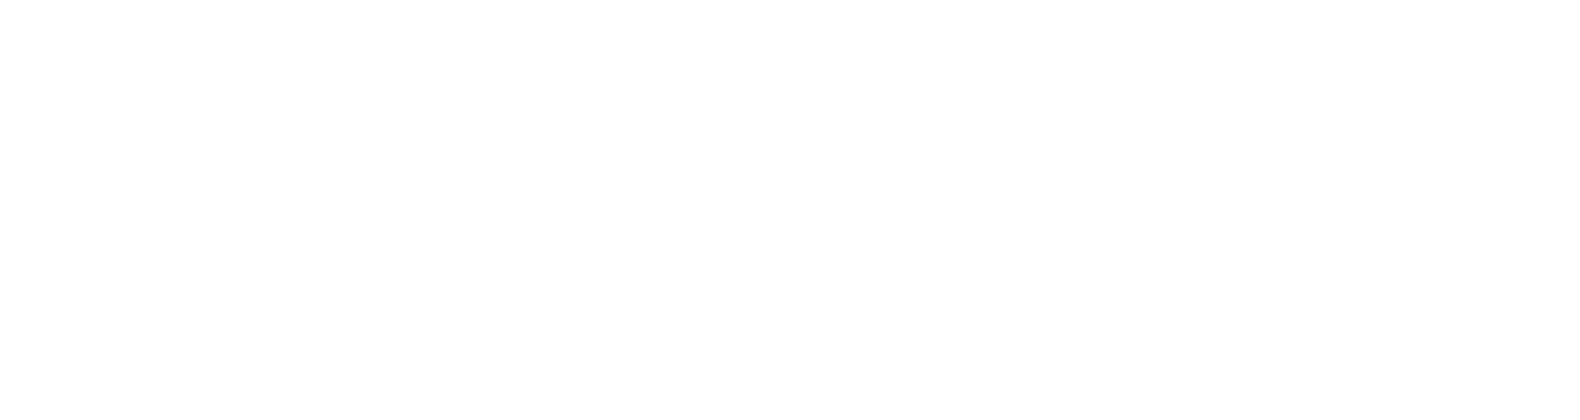 wilson house dental practice logo4